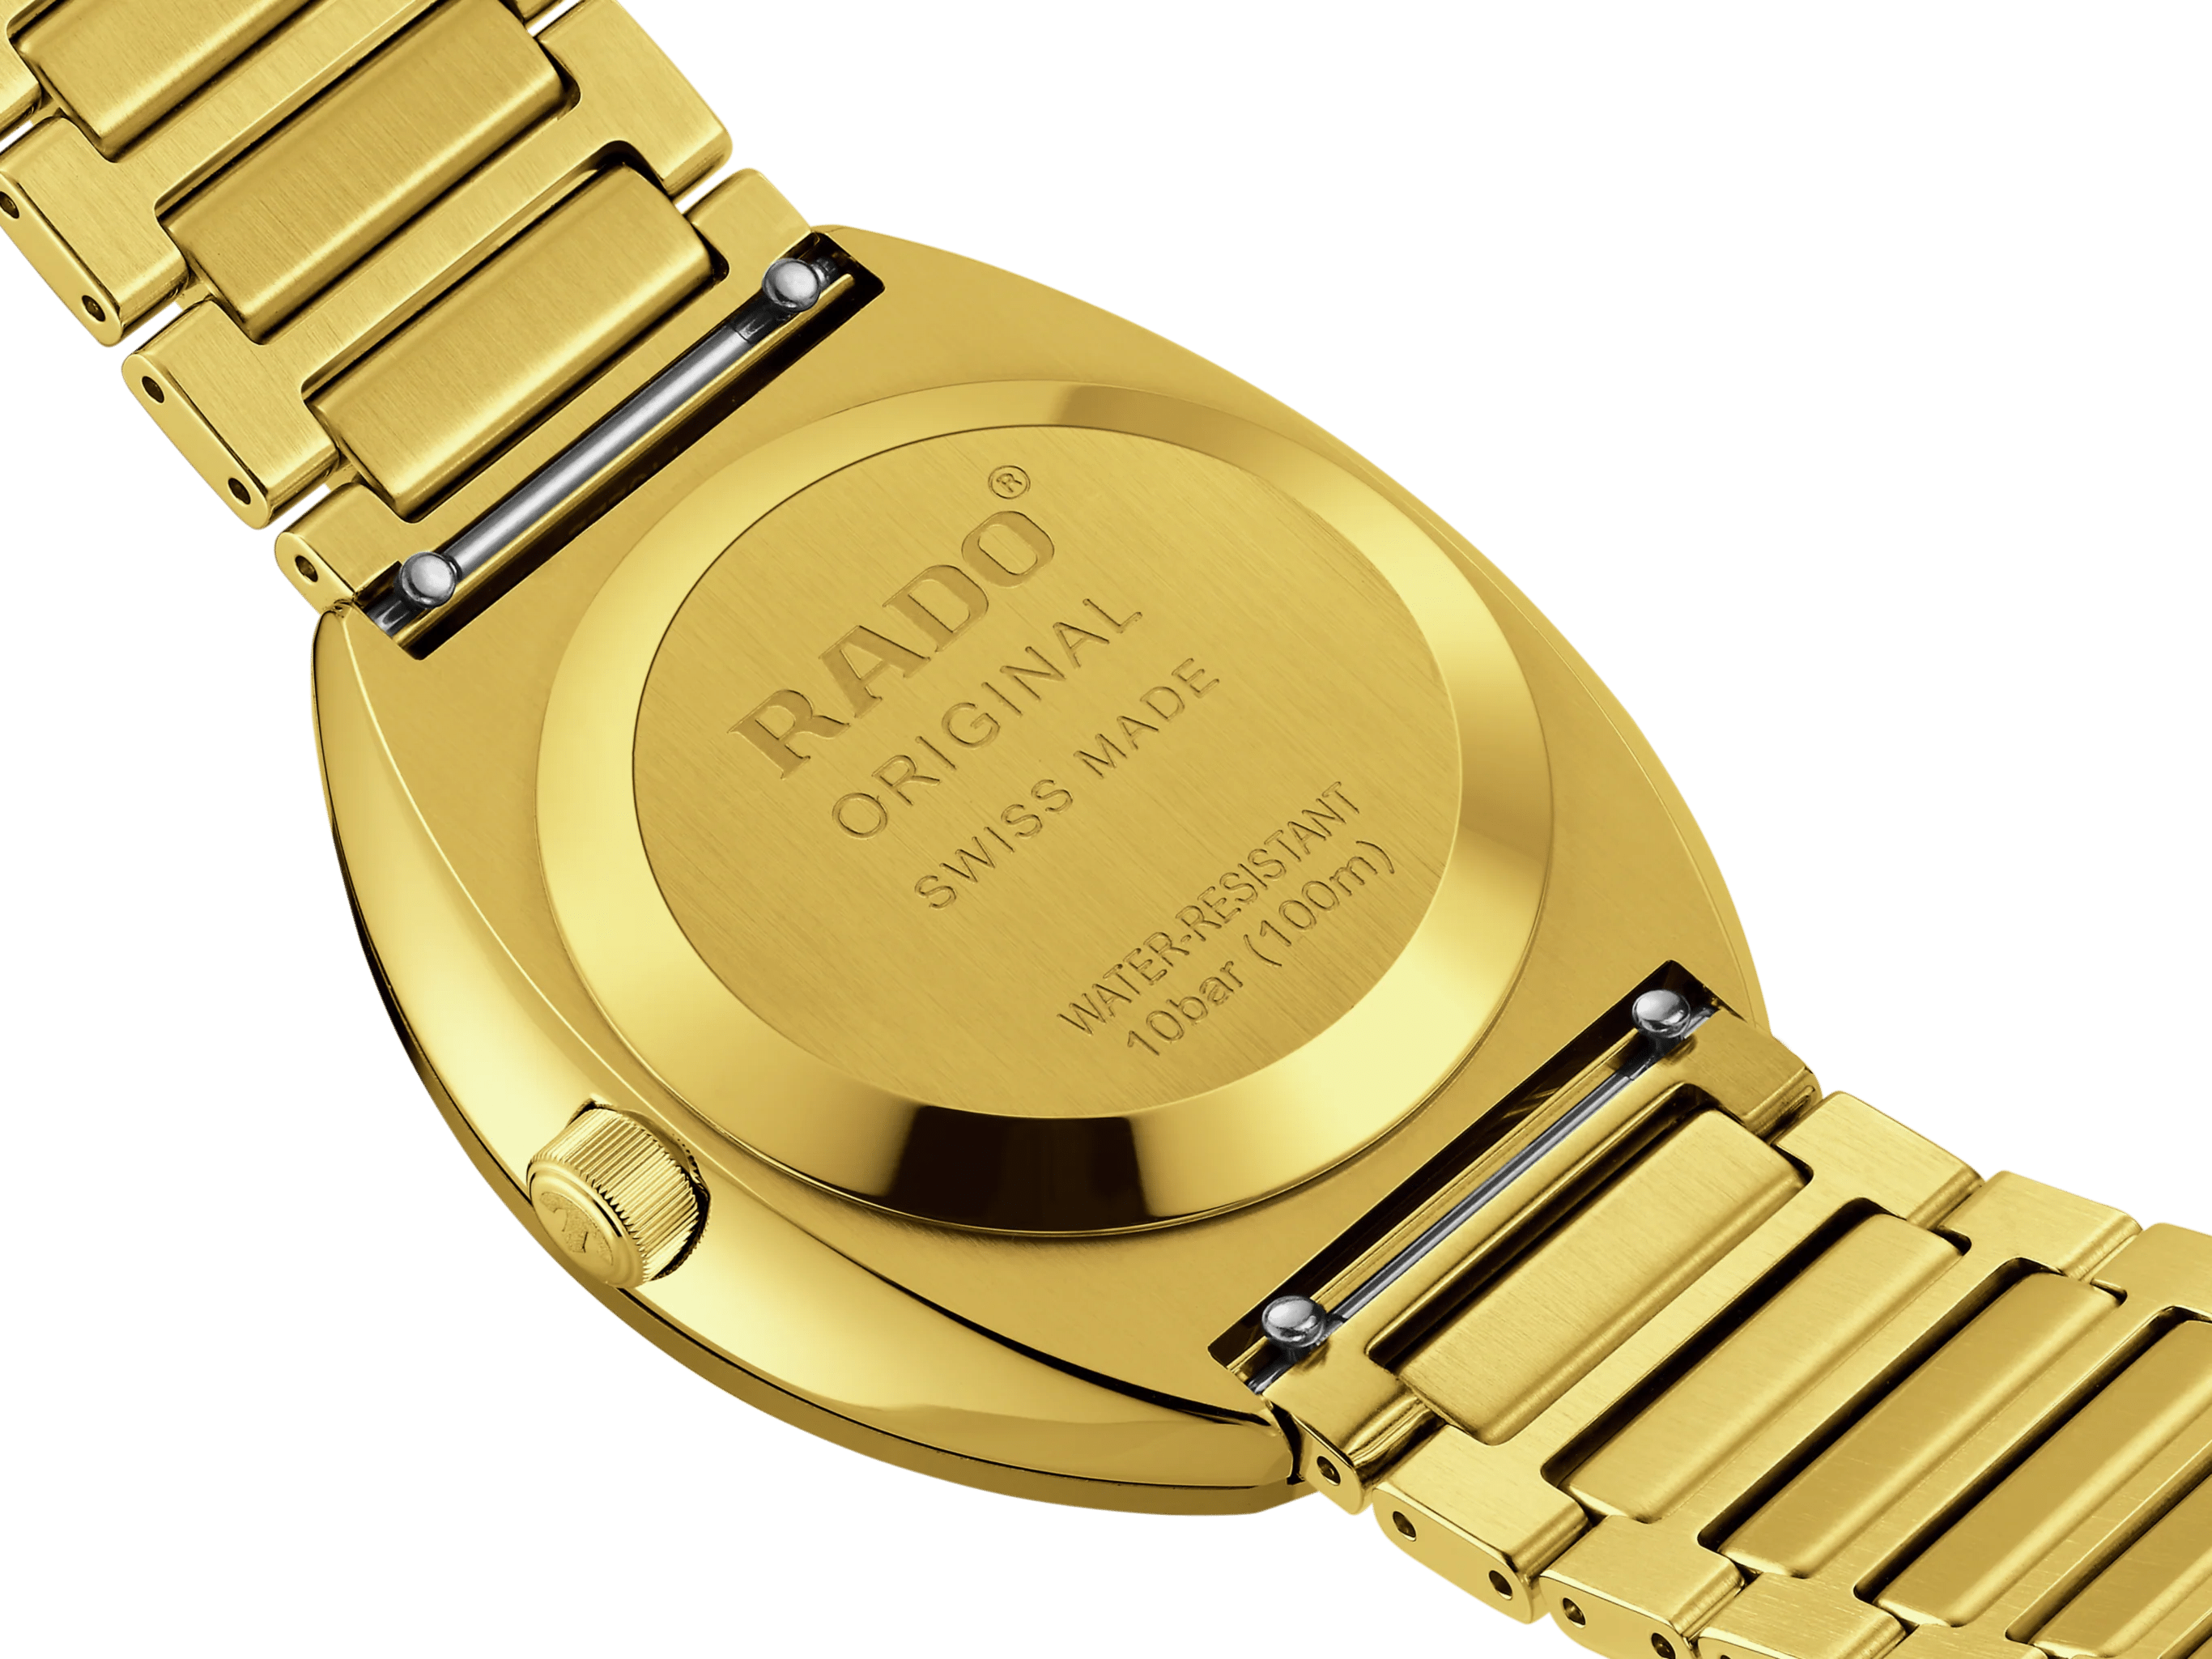 Rado DiaStar Original 38mm Yellow Gold PVD Diamonds Men's Watch R12161733